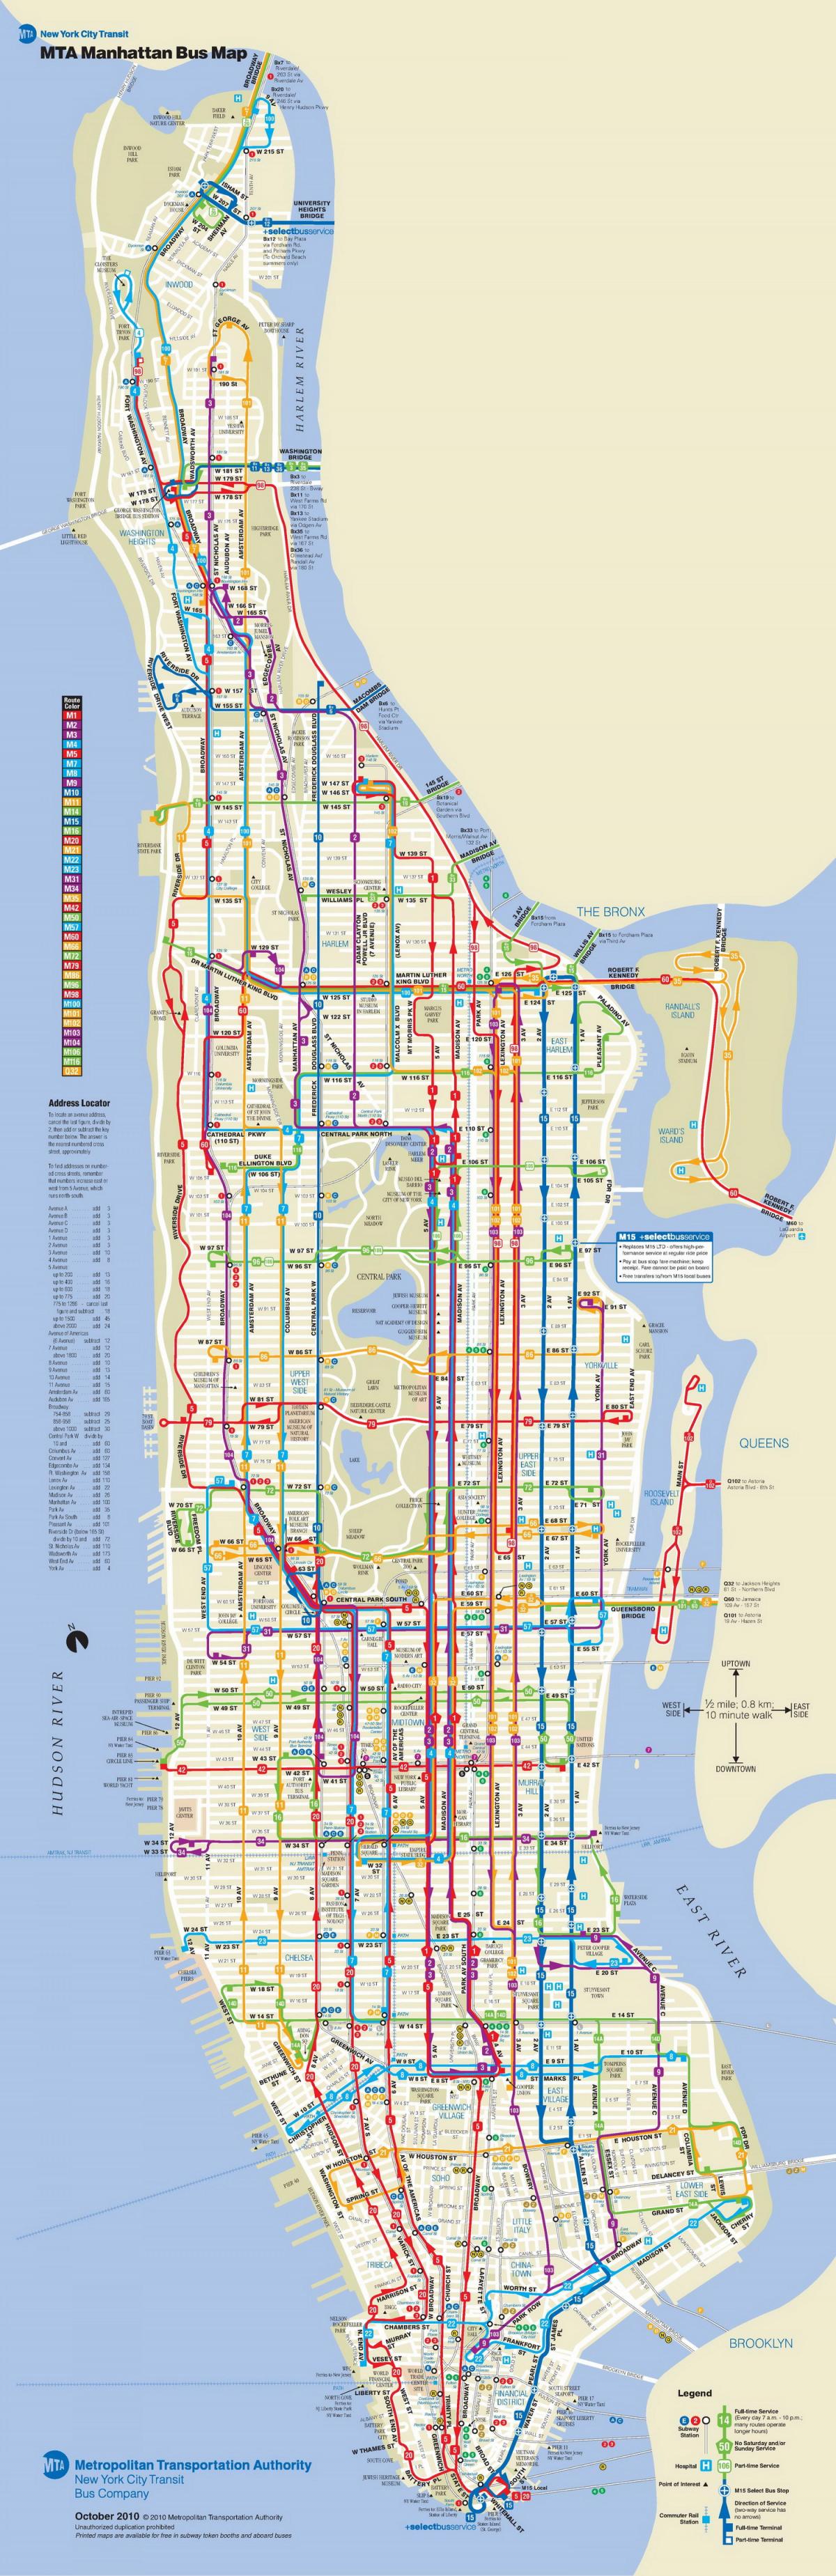 MTA autobus mapa manhattan